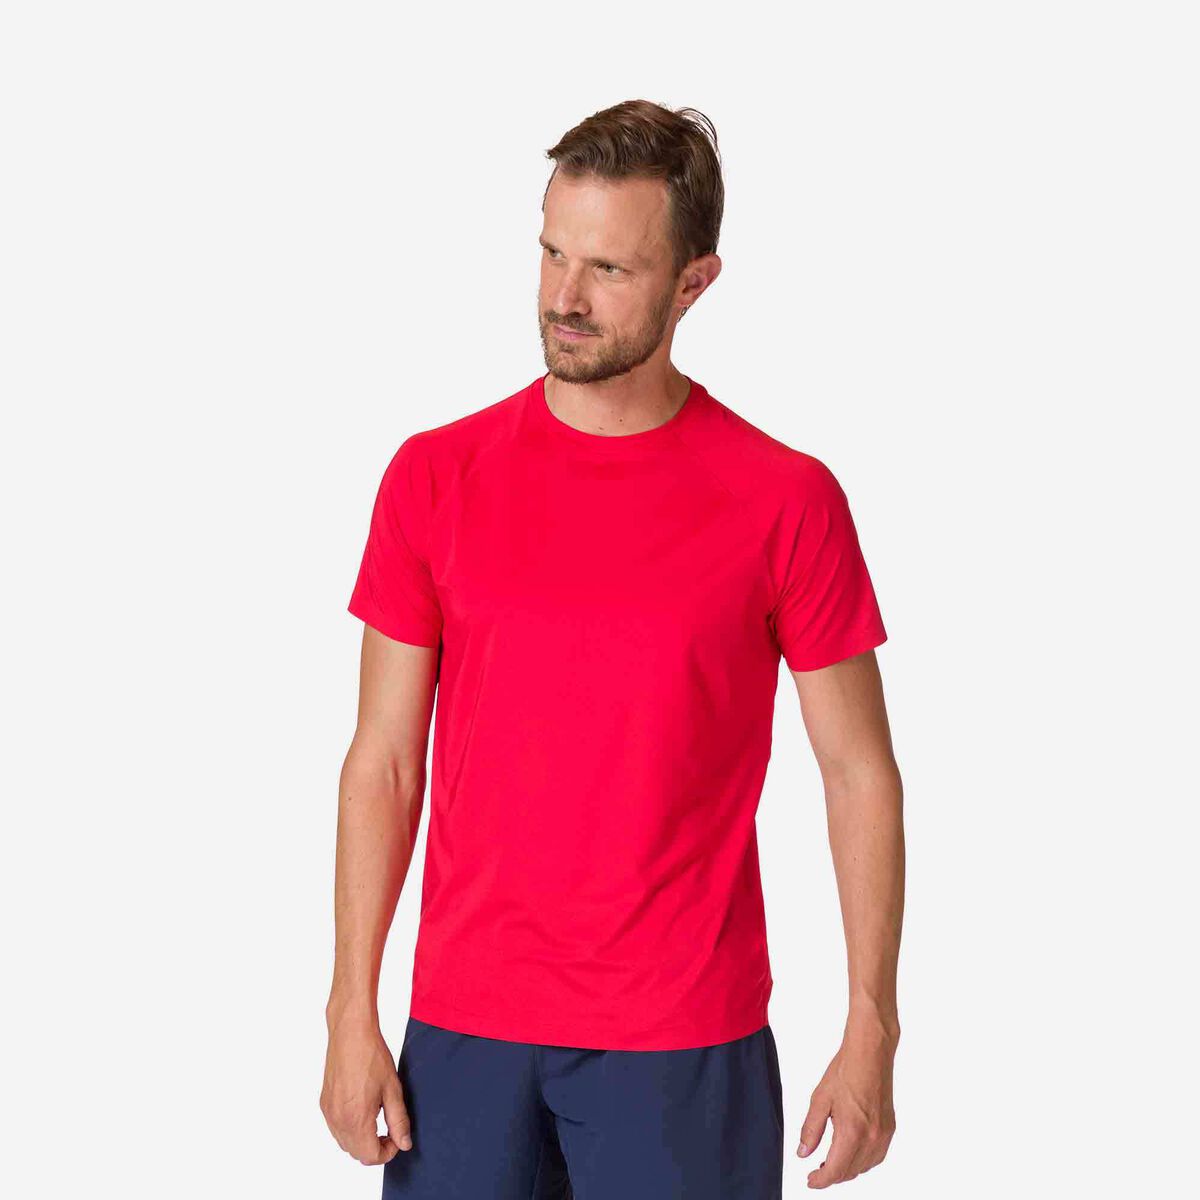 Camiseta transpirable ligera para hombre